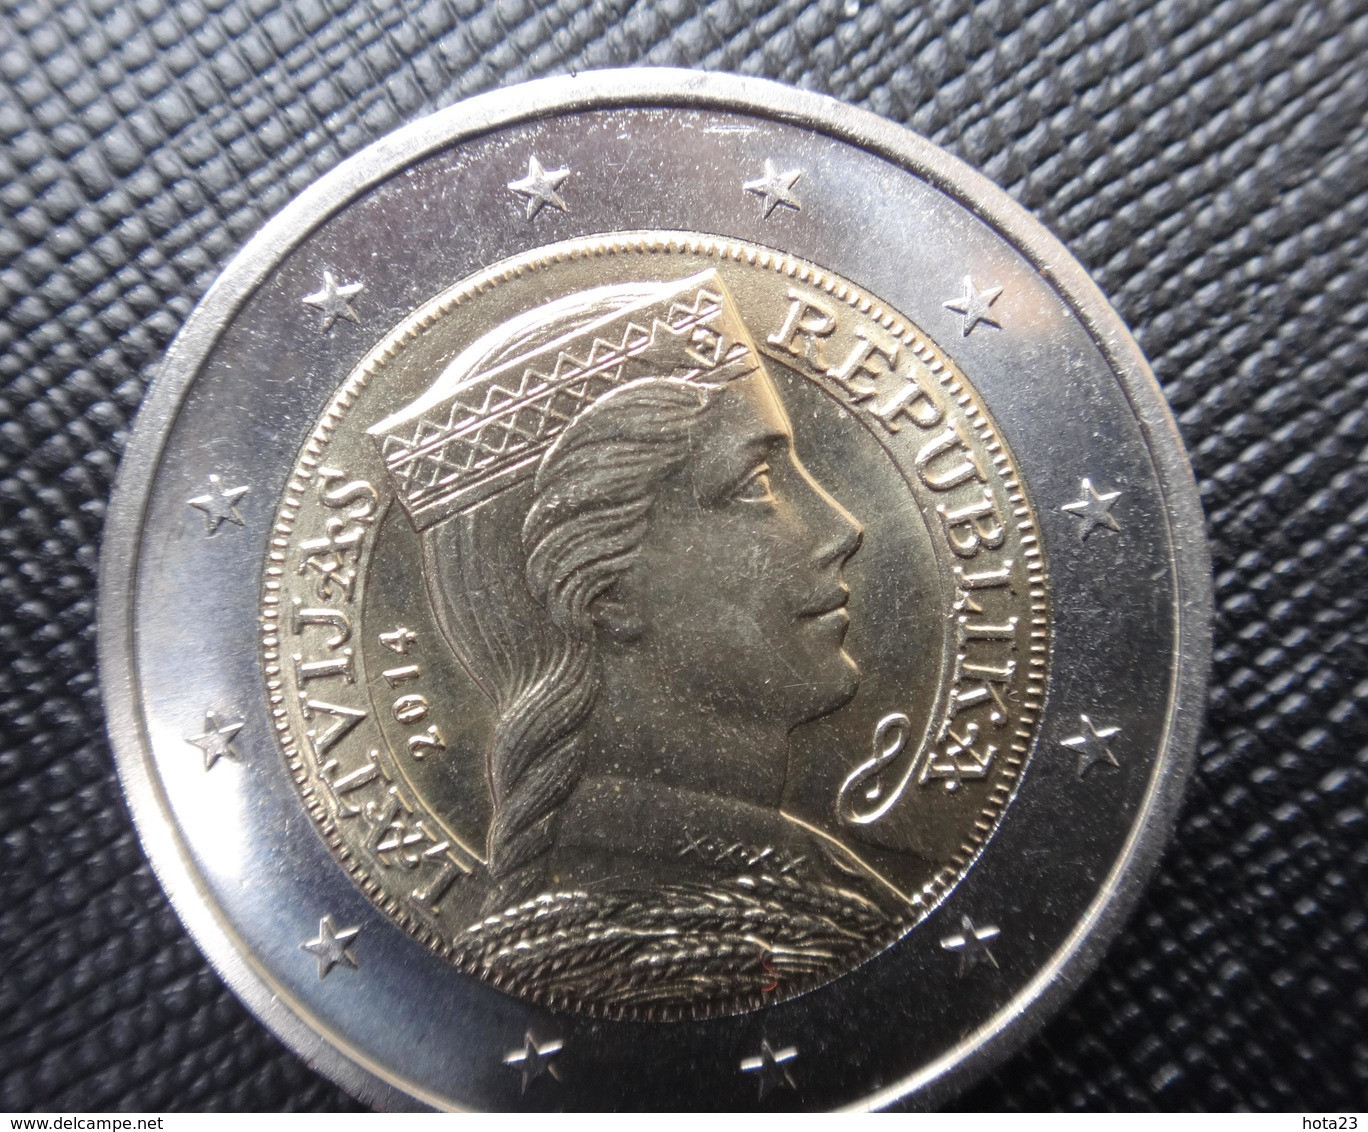 LETTLAND 2 EURO Kursmünze MÜNZEN 2014 Jahre LATVIA COIN  CIRCULATED - Letland